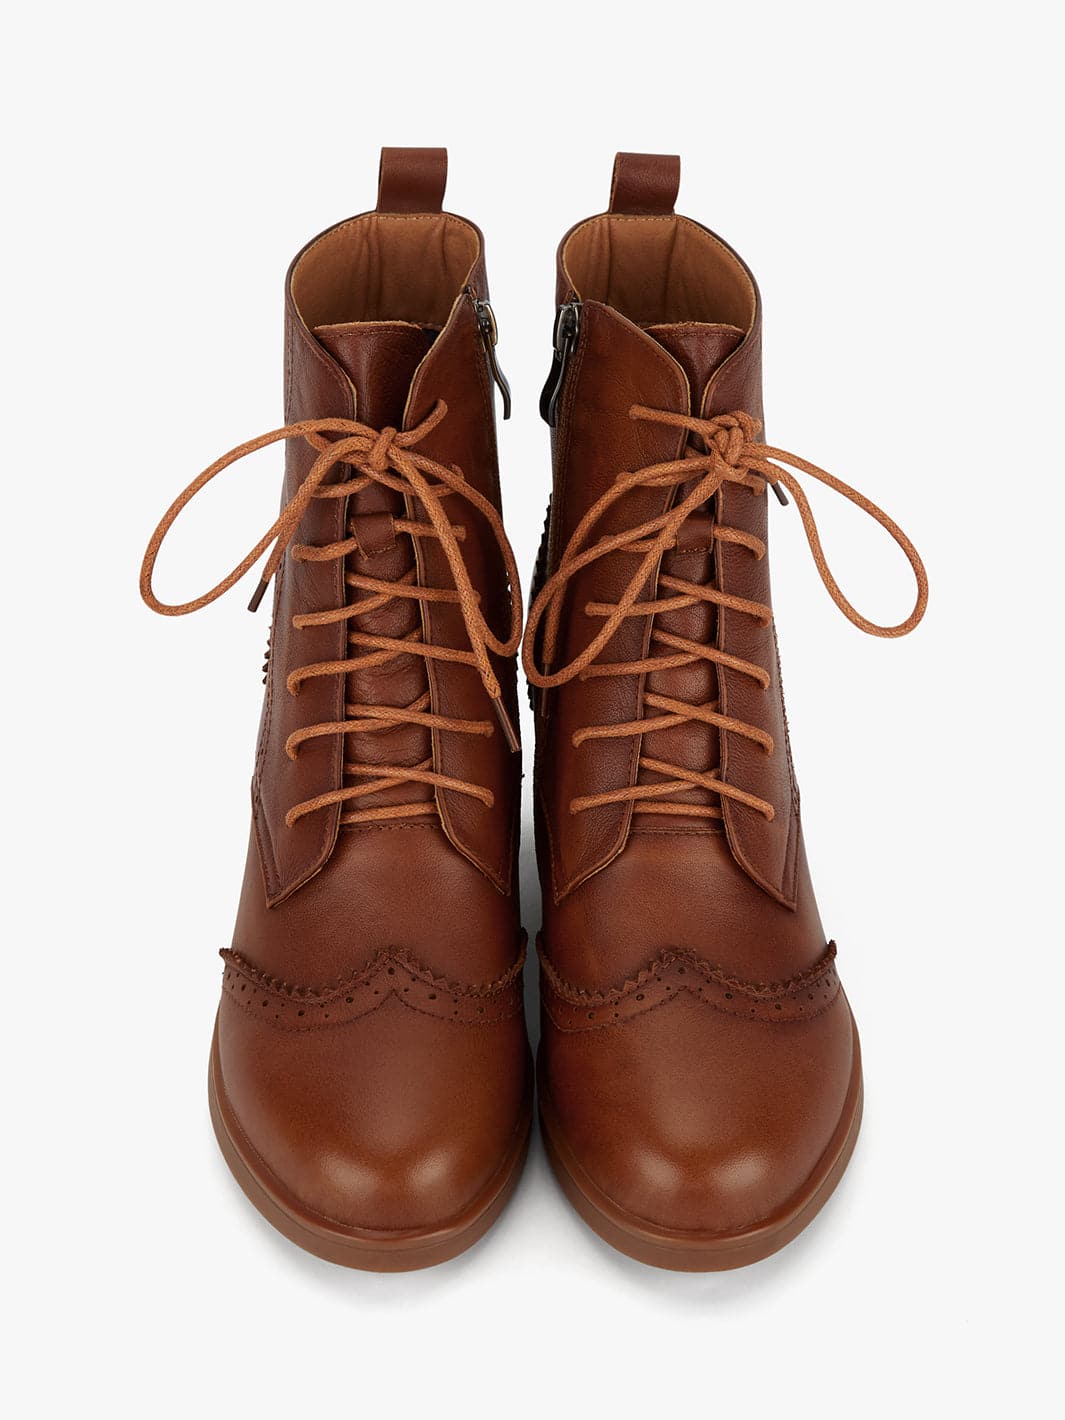 Vintage Martin Boots - Soft Vegan Leather - Heel: 5cm - Zip